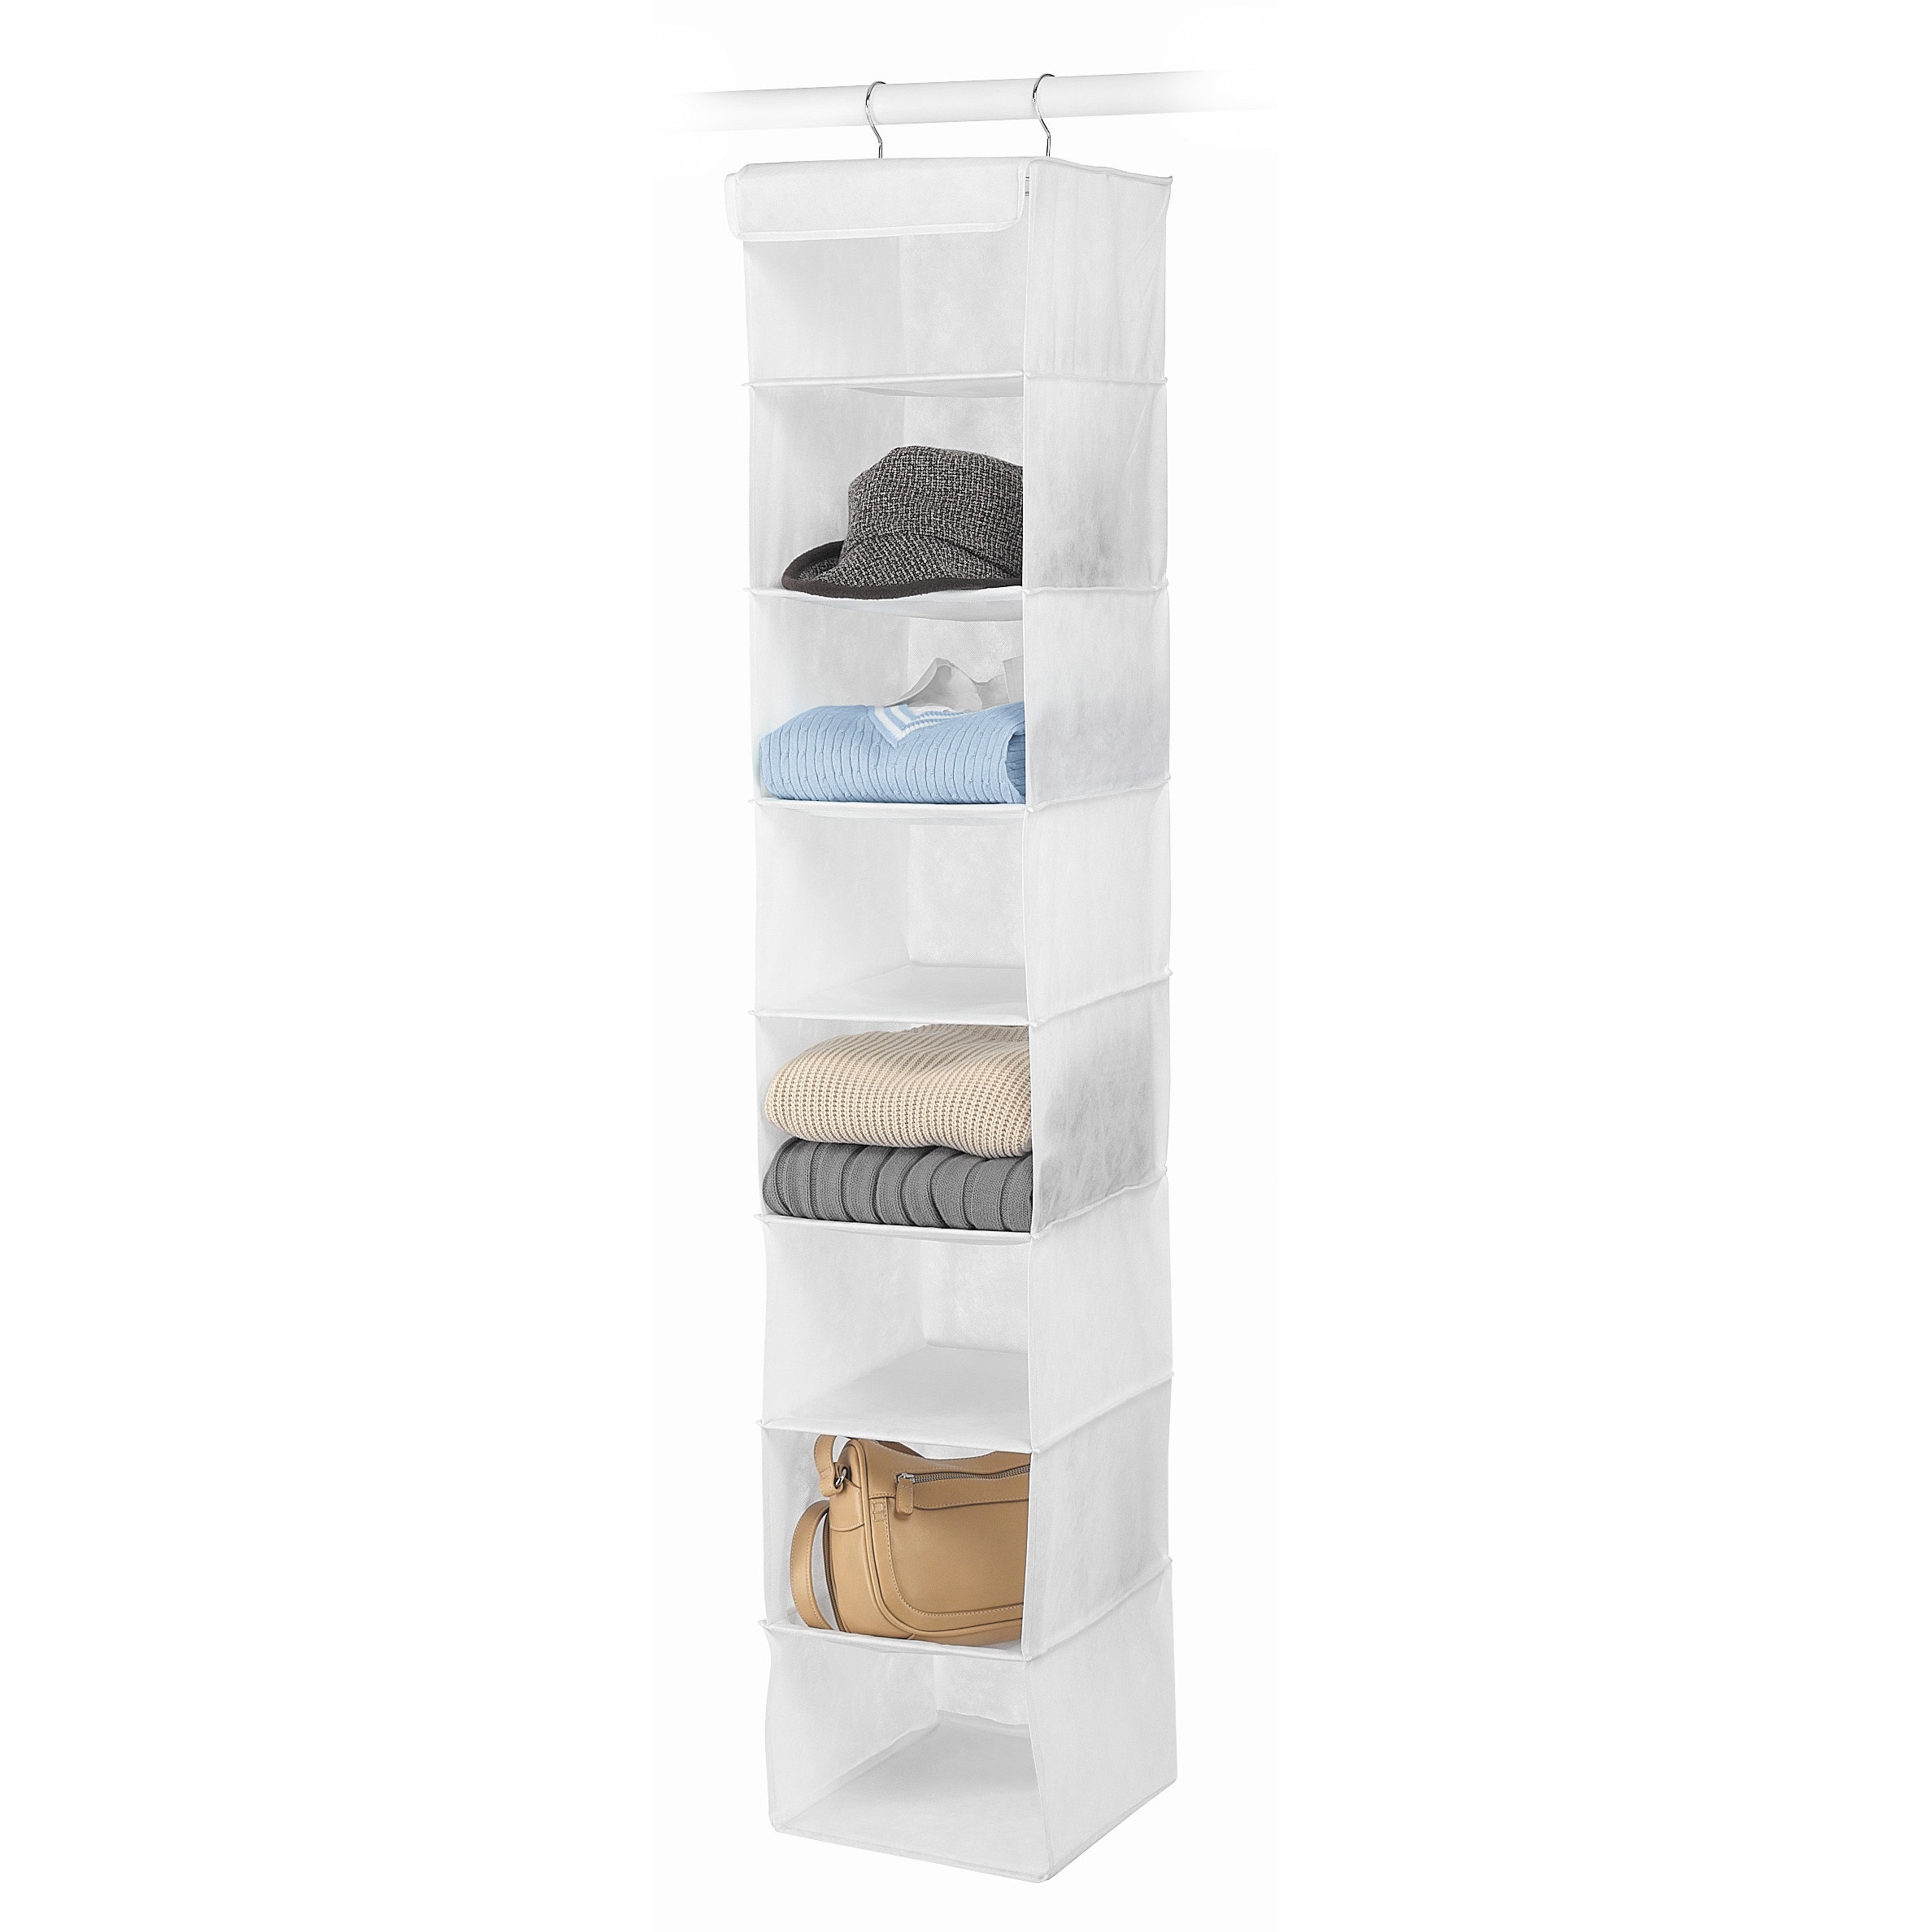  Whitmor 4 Tier Shelf Tower - Closet Storage Organizer